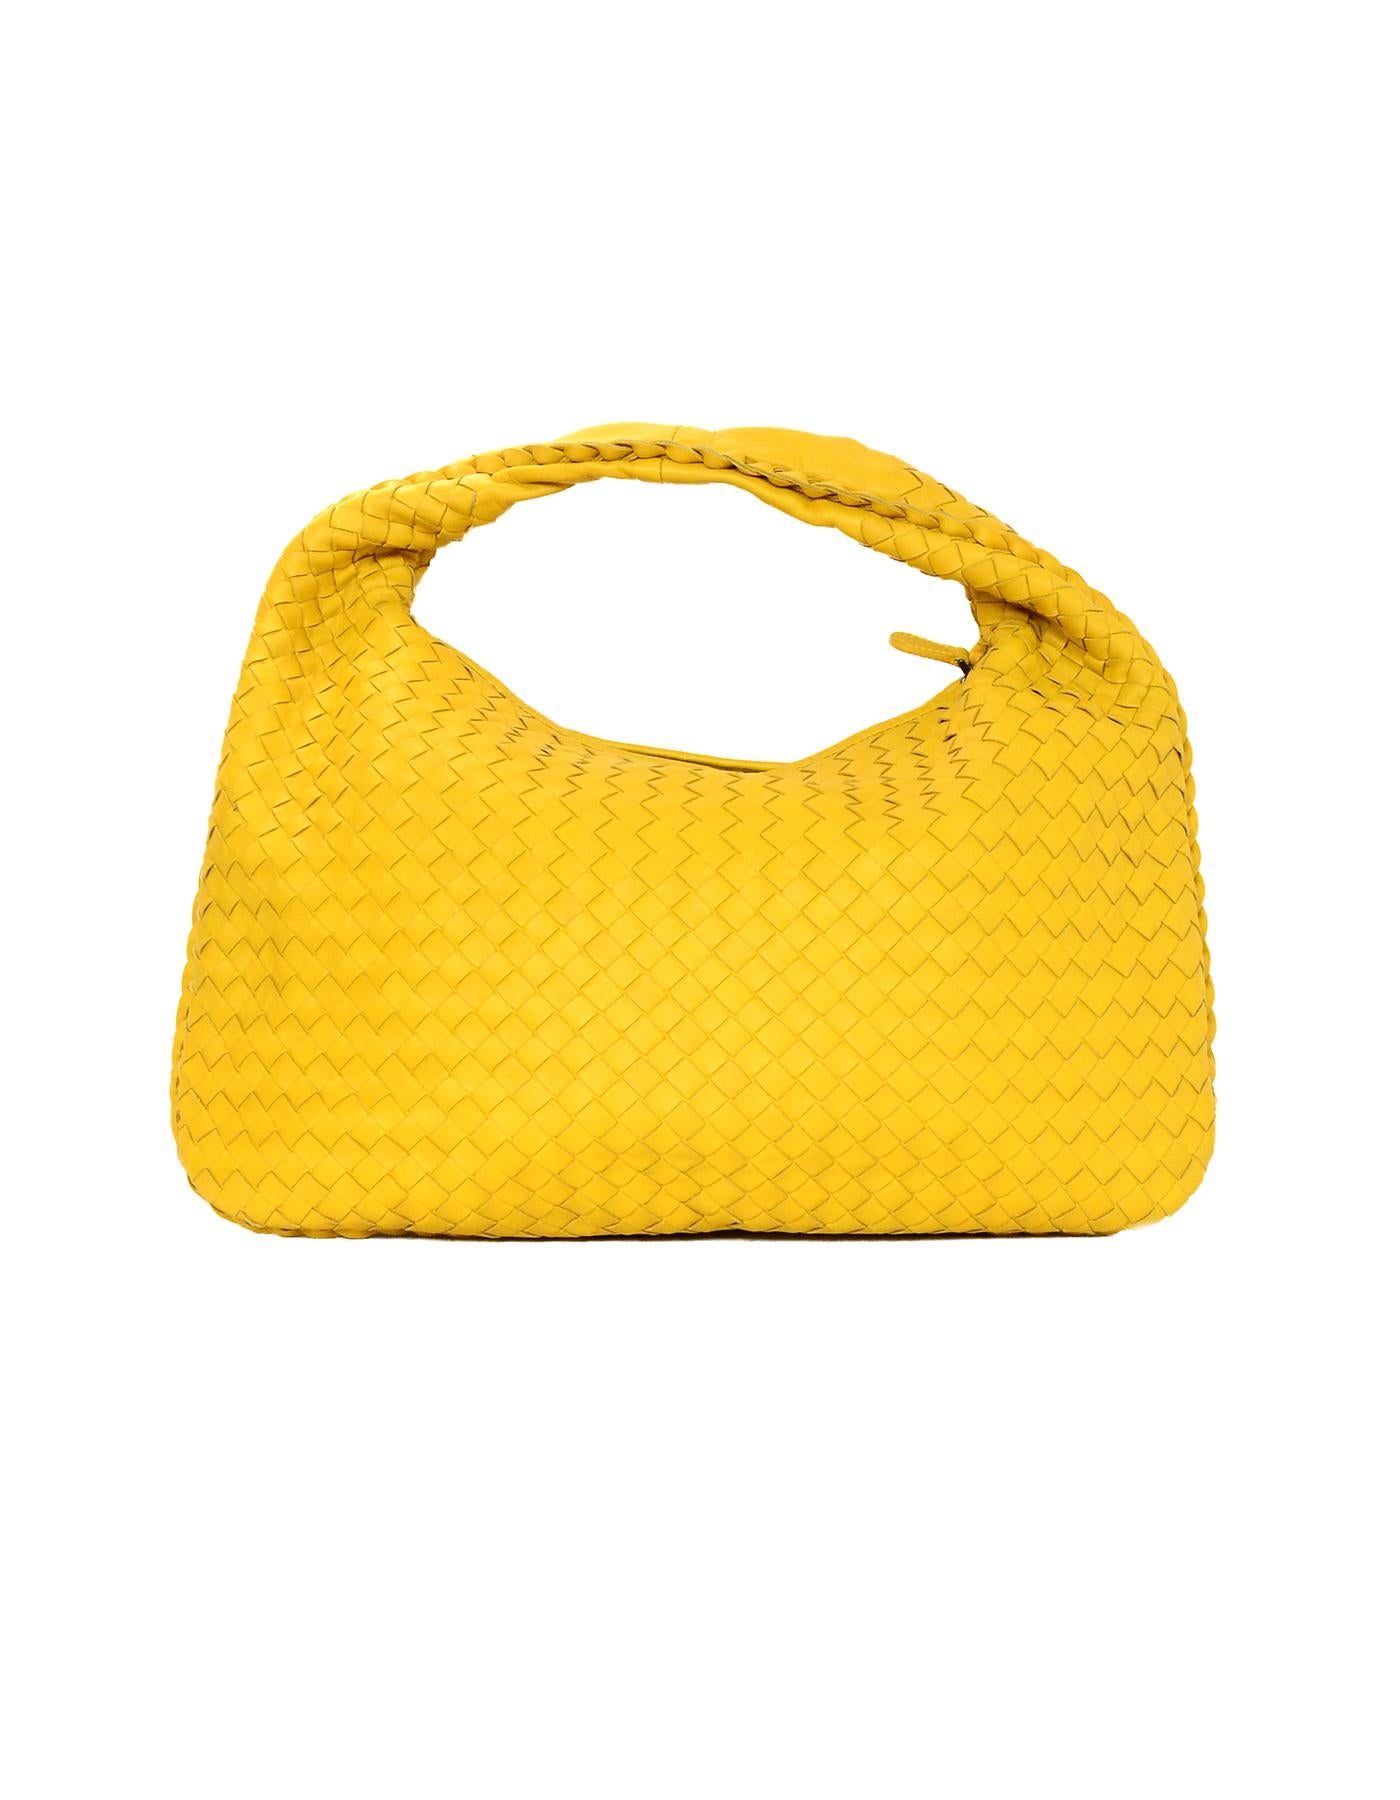 Bottega Veneta Yellow Woven Leather Nappa Intrecciato Medium Veneta Hobo Bag In Excellent Condition In New York, NY